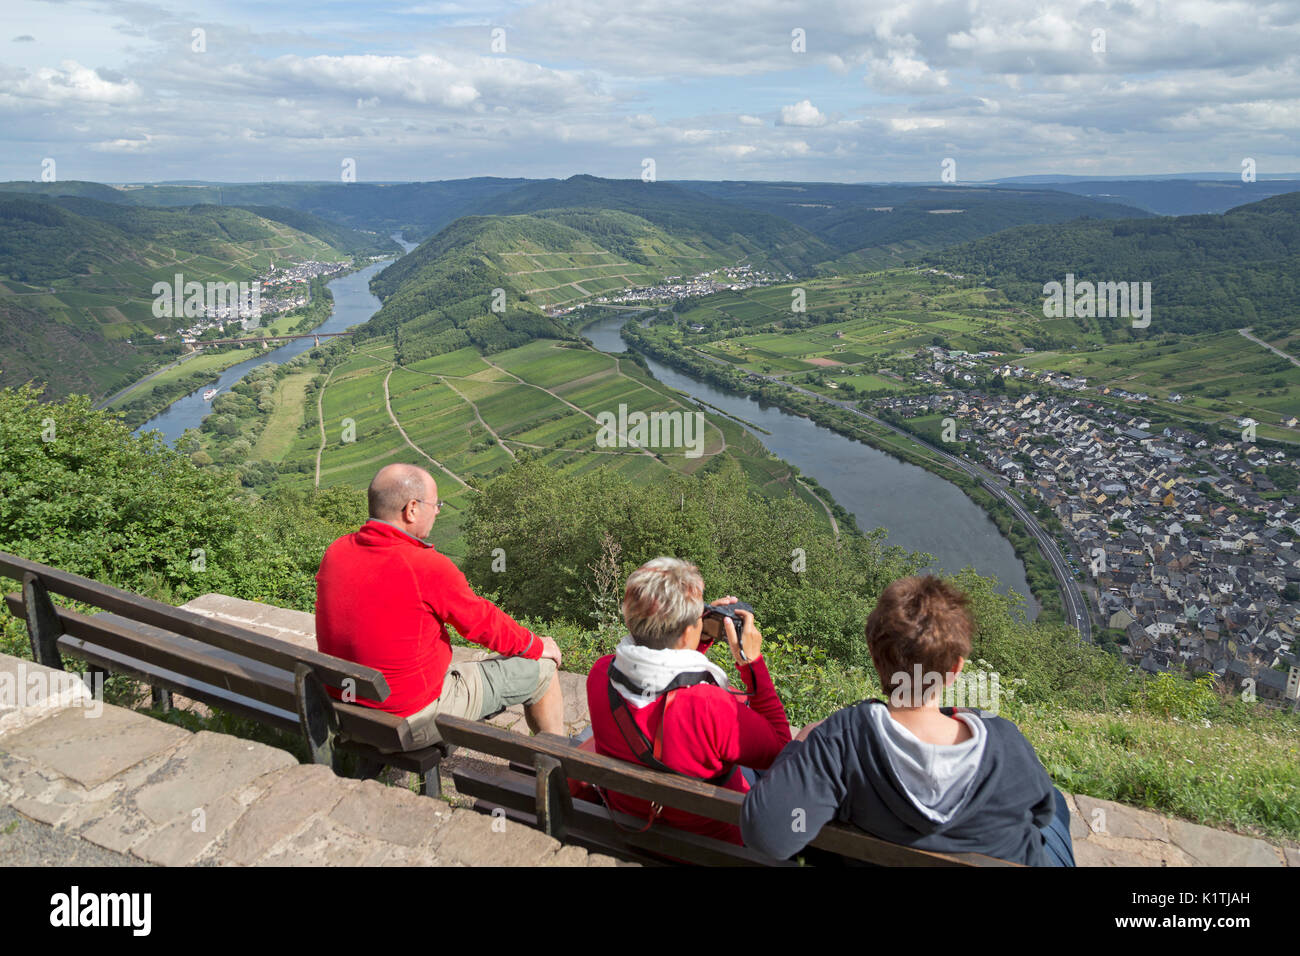 River Moselle Sinuosity near Bremm, Rhineland-Palatinate, Germany Stock Photo